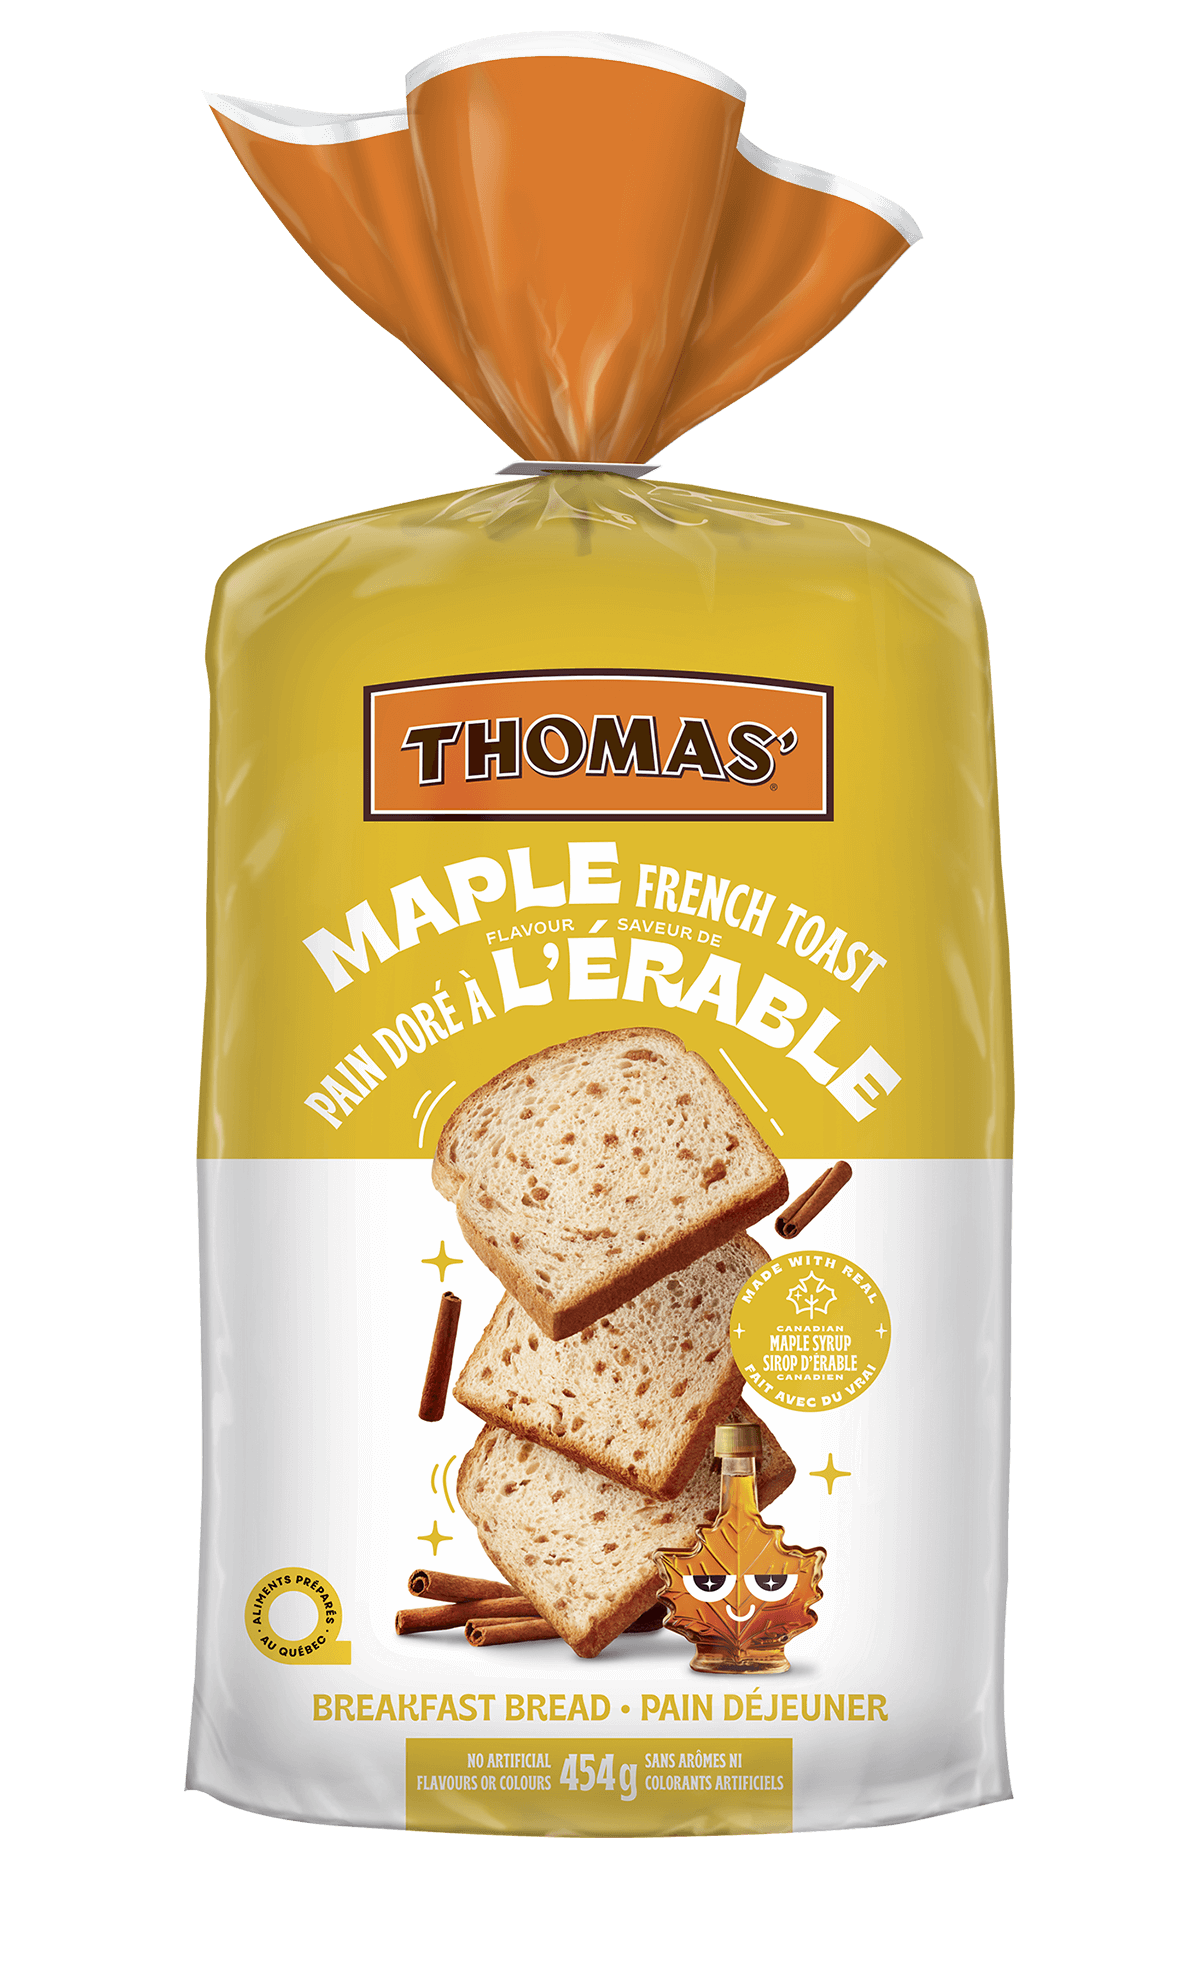 Thomas' Maple French Toast Breakfast Bread